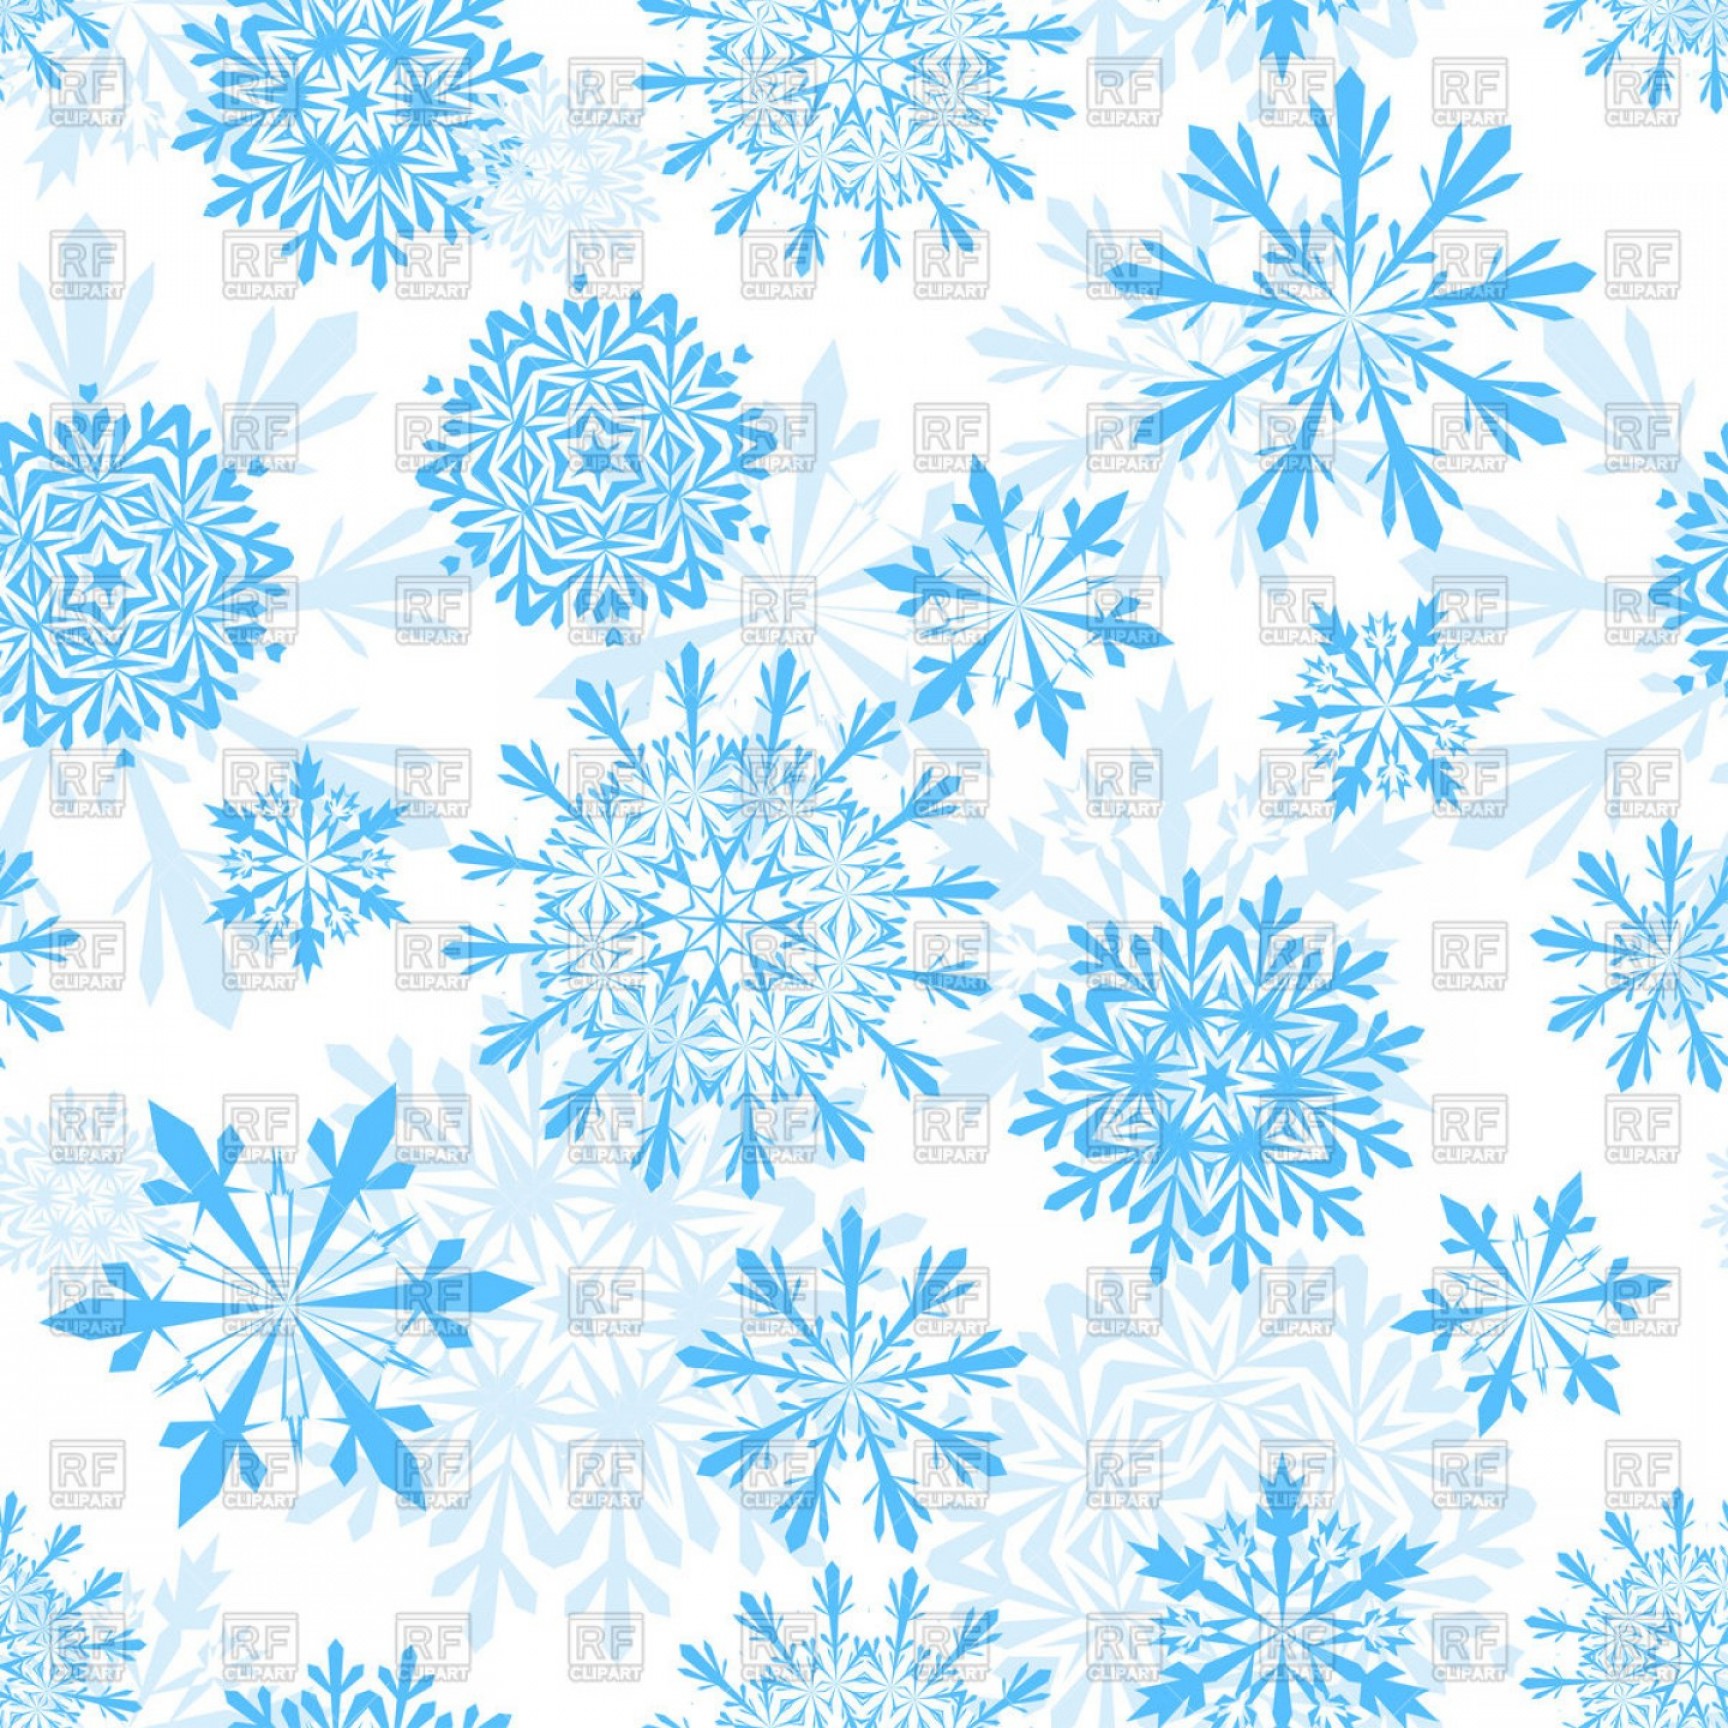 Free snowflake background.